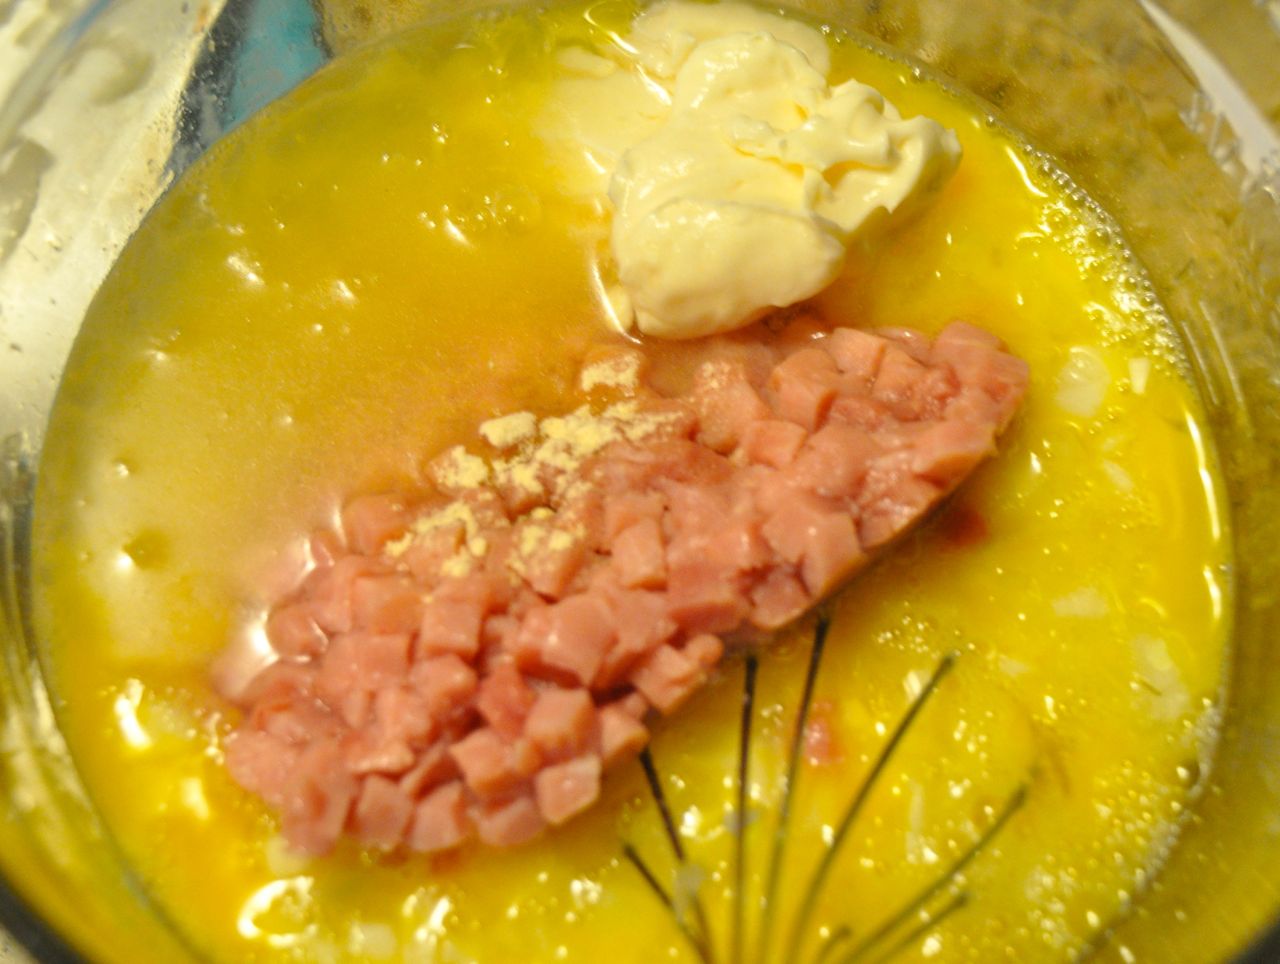 onion ham water mayo in eggs